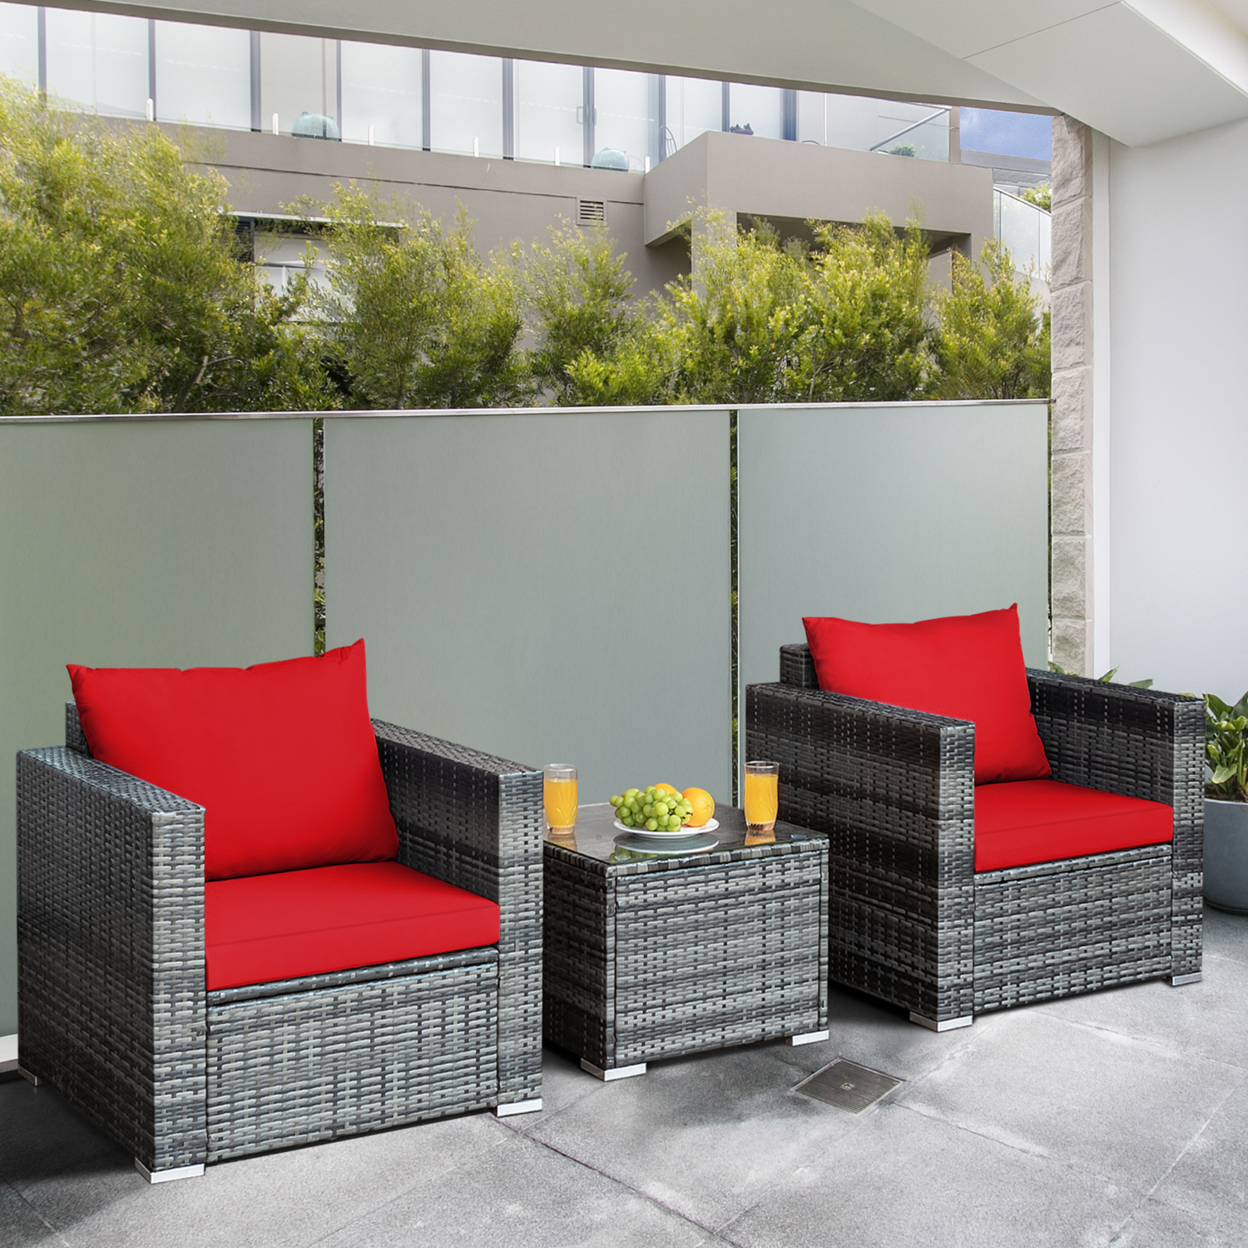 3PCS Rattan Patio Conversation Furniture Set Outdoor Yard W/ Red Cushion